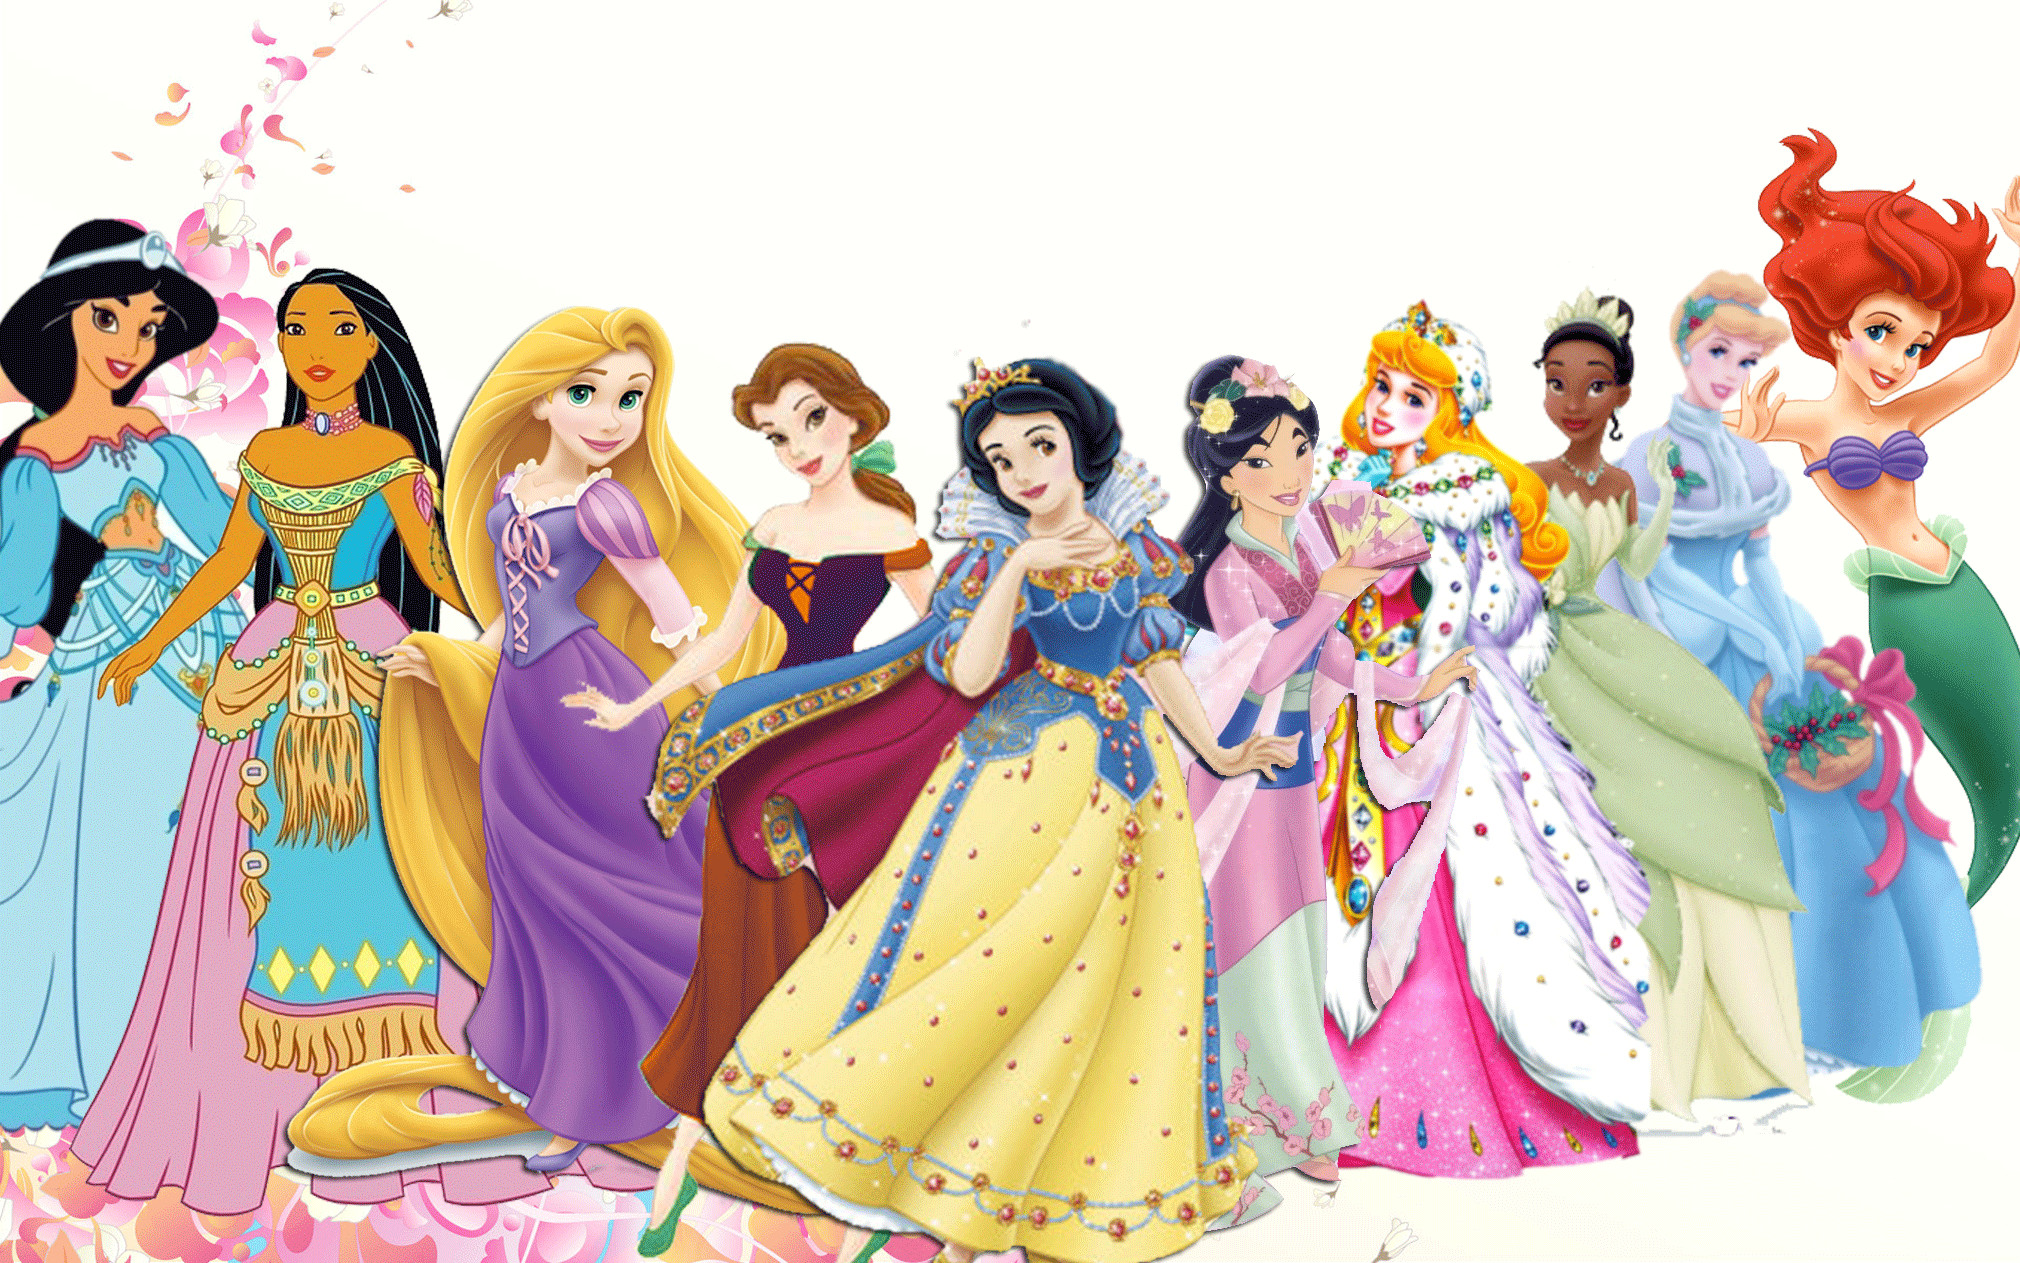 2020x1263 disney princess costumes image, disney princess costumes wallpaper .